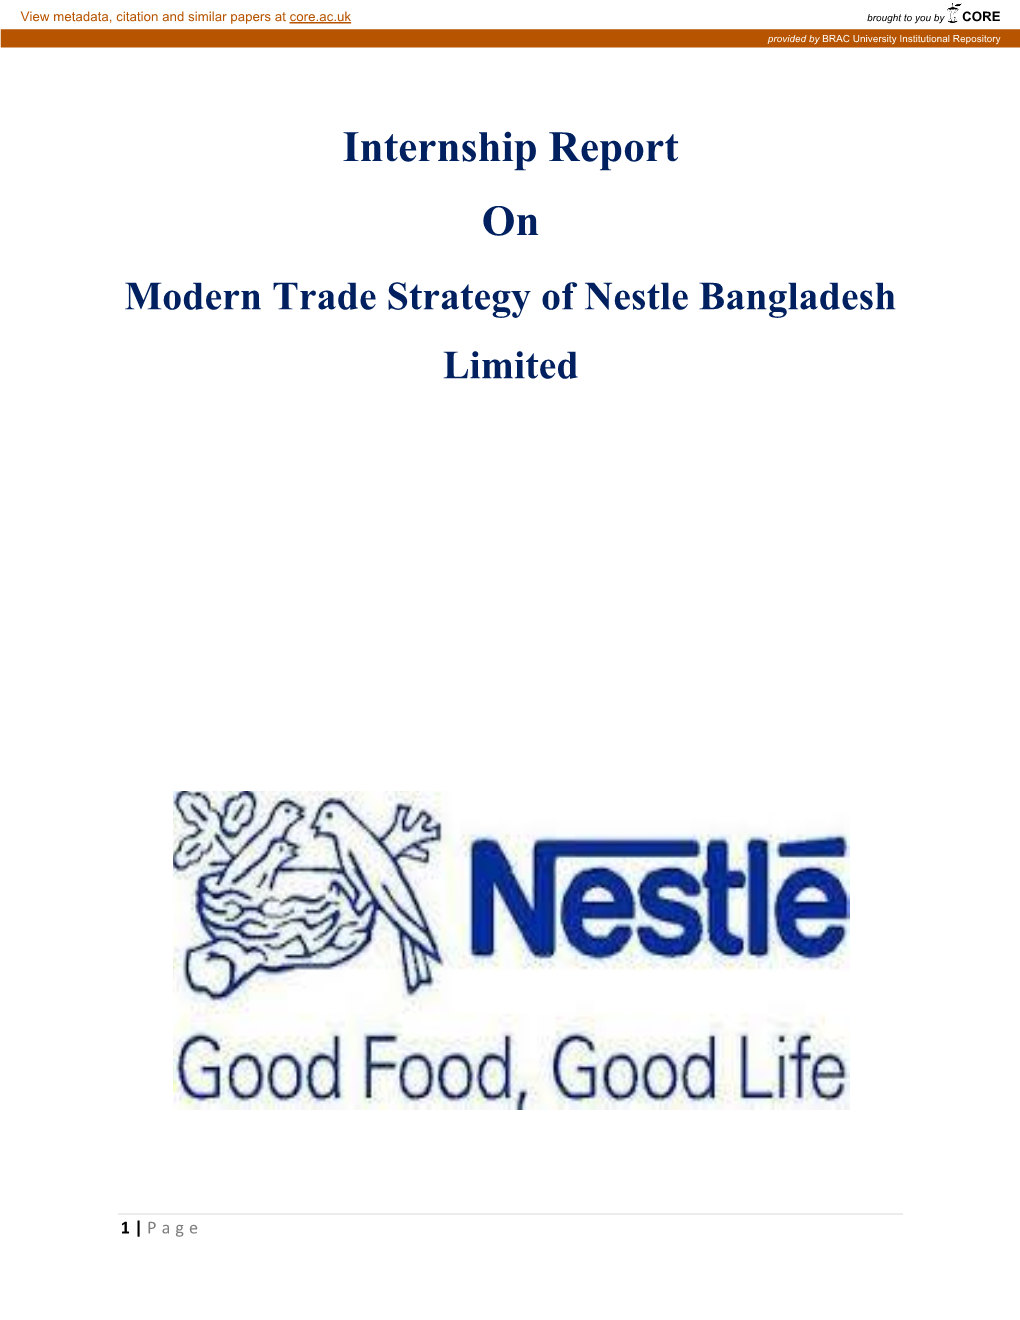 Internship Report on Modern Trade Strategy of Nestle Bangladesh Limited